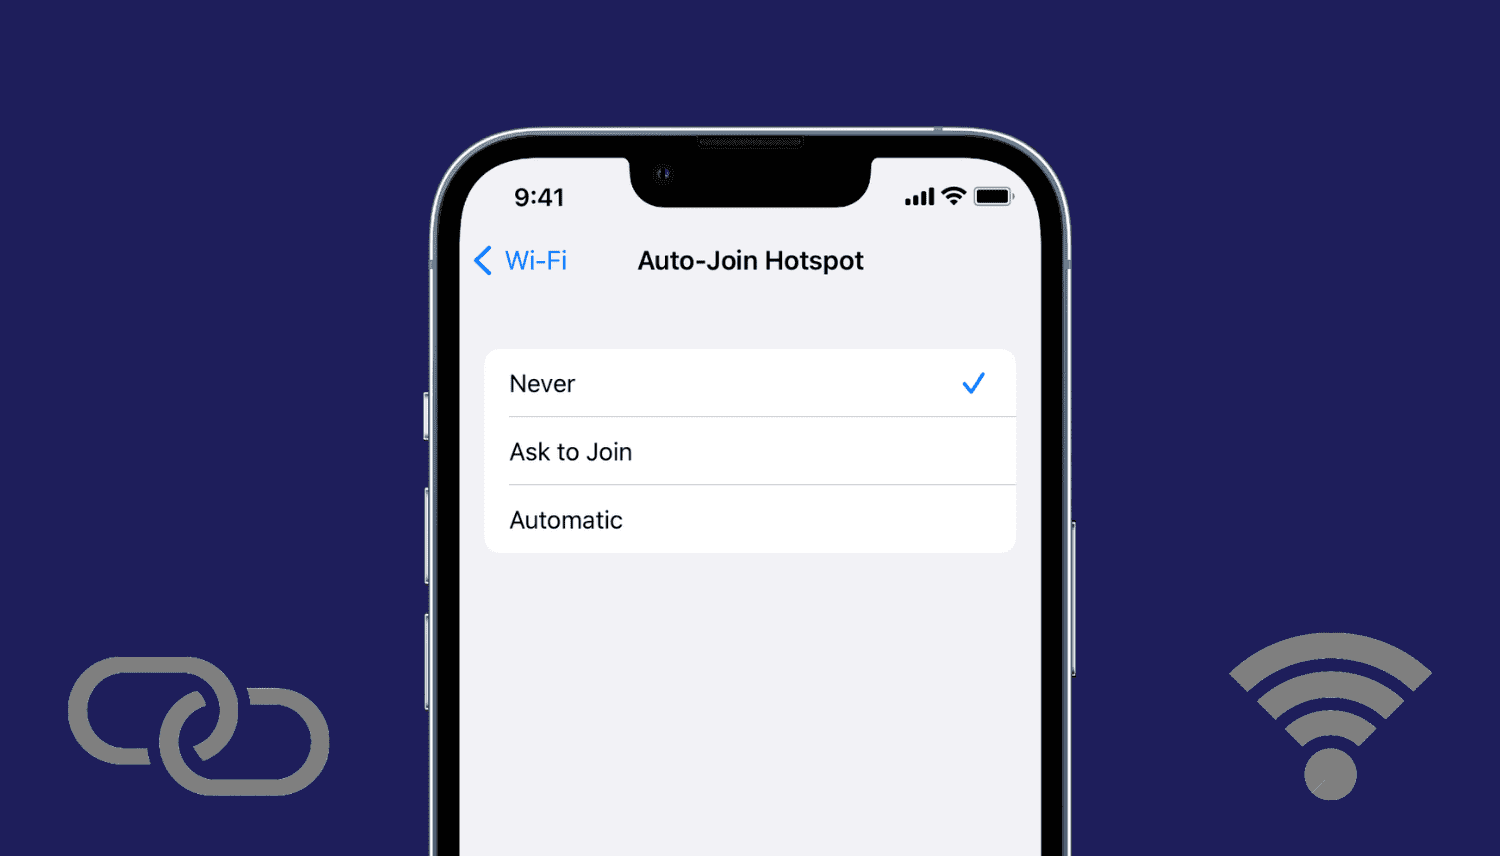 Auto-Join Hotspot settings on Apple devices